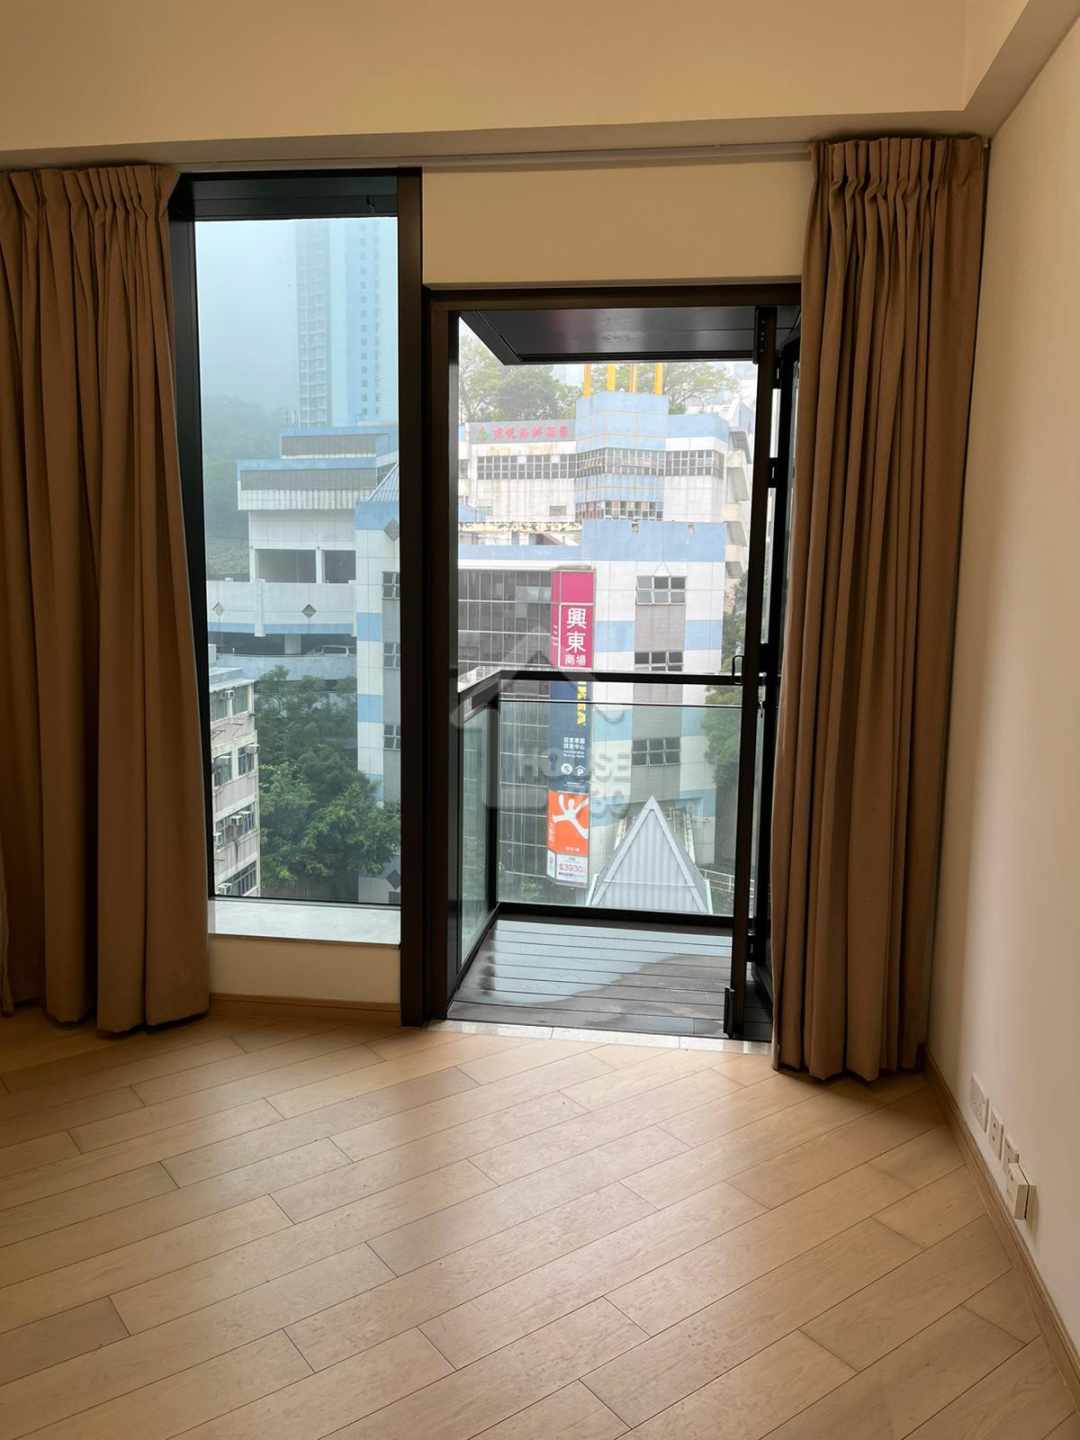 Sai Wan Ho PARKER33 Lower Floor House730-7243456